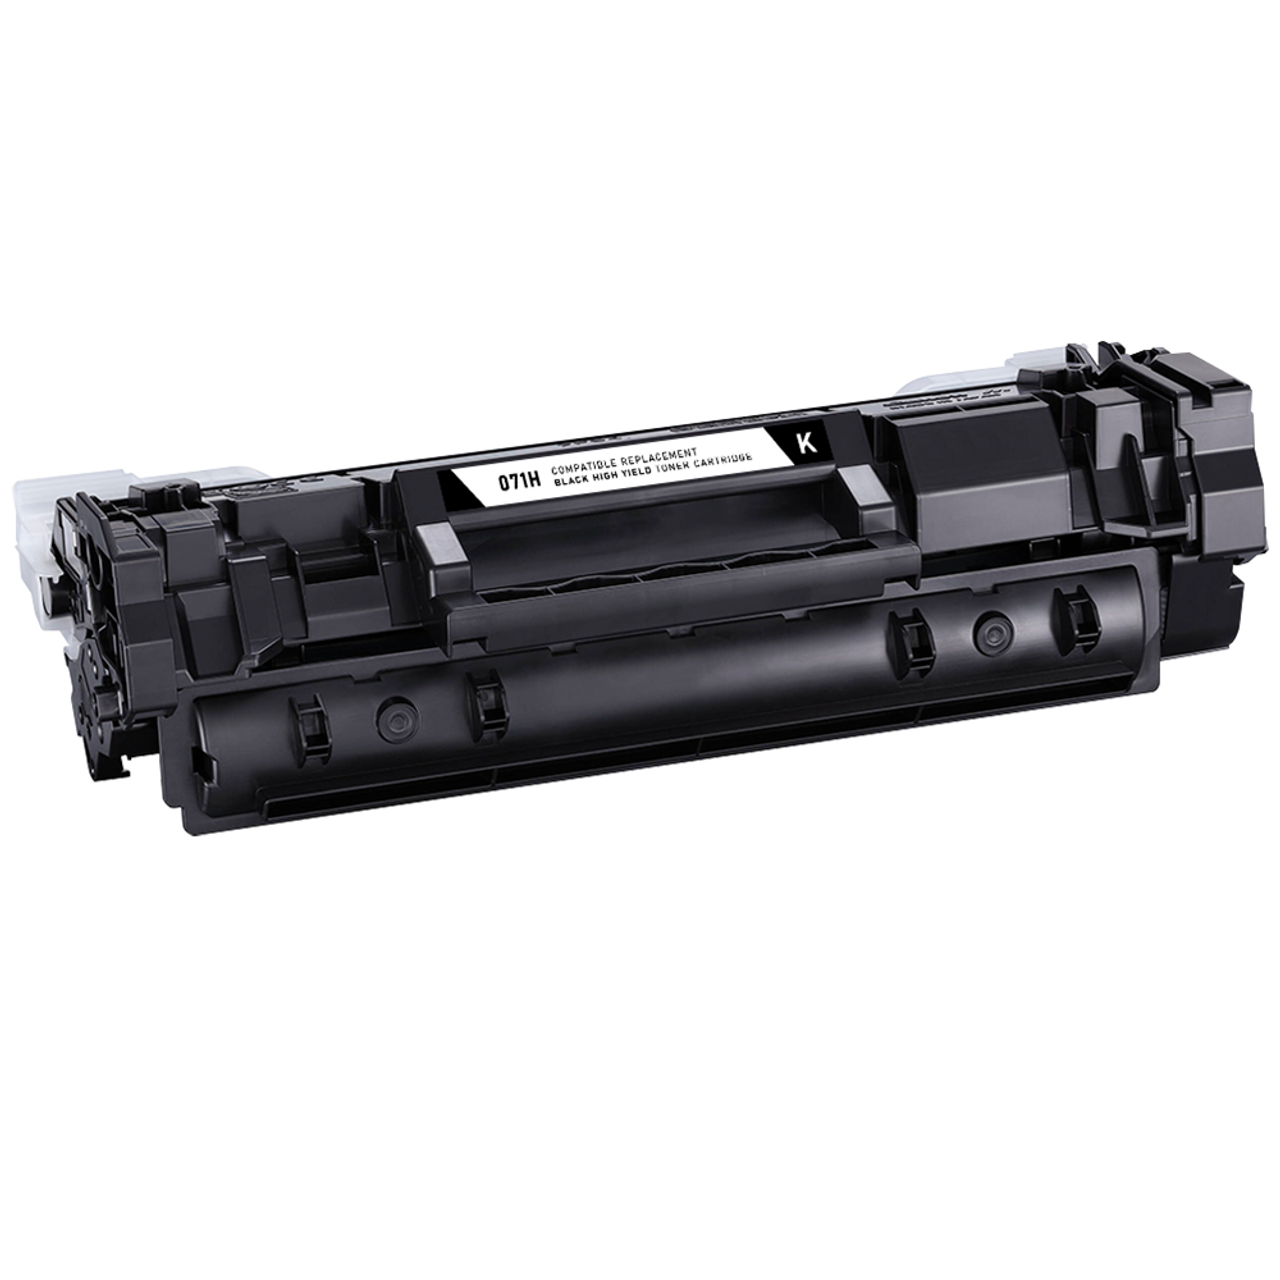 Replacement Canon 057H Toner Cartridge - 3010C001 Black - High Yield